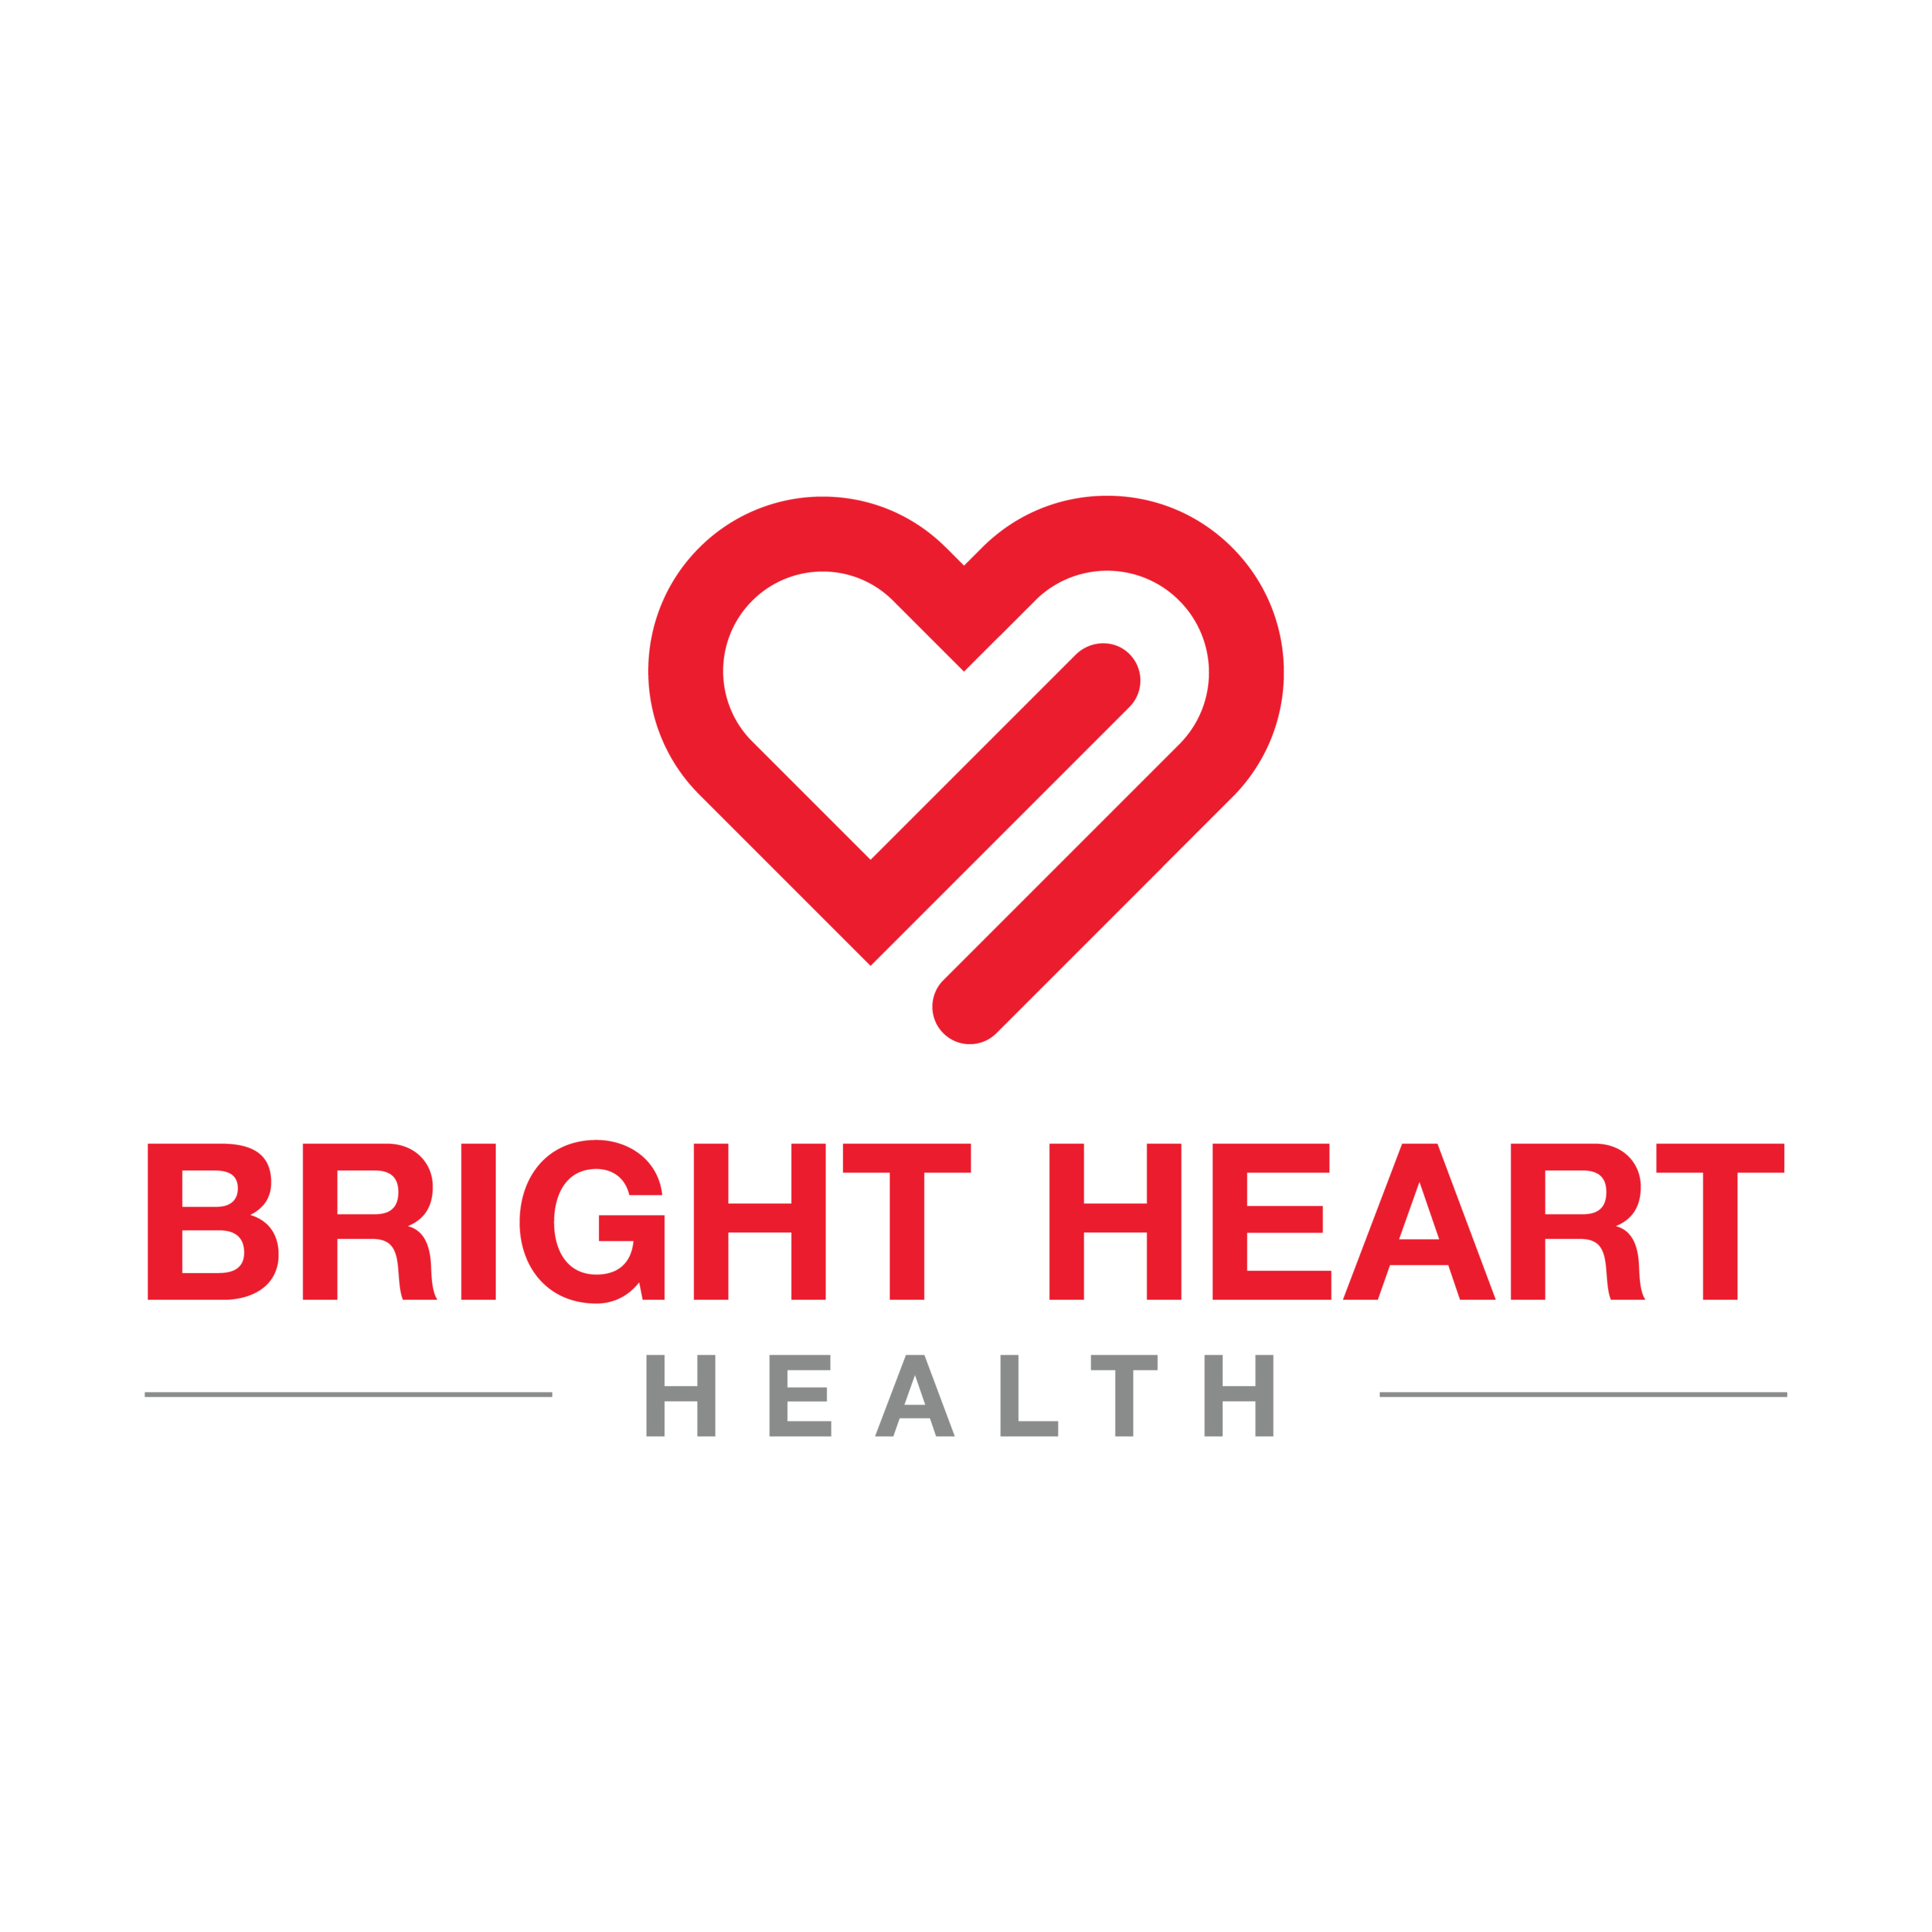 Bright Heart Health, Walnut Creek, California, 94597